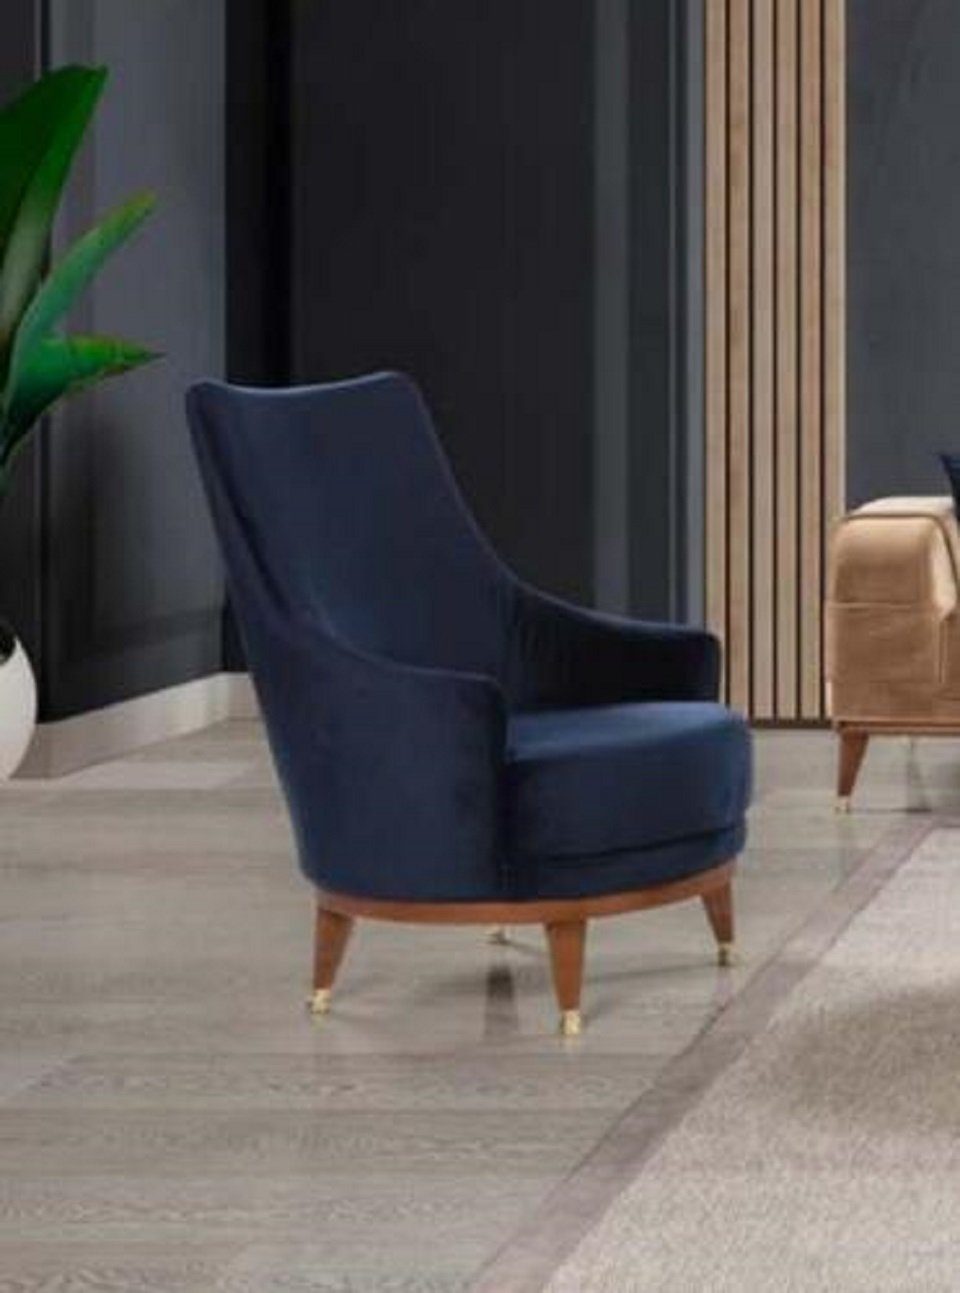 JVmoebel Sessel Einsitzer Sessel Luxus 1 Sitz Polster Sitz Design Blau Sitz Stoff Neu (Sessel), Made in Europe